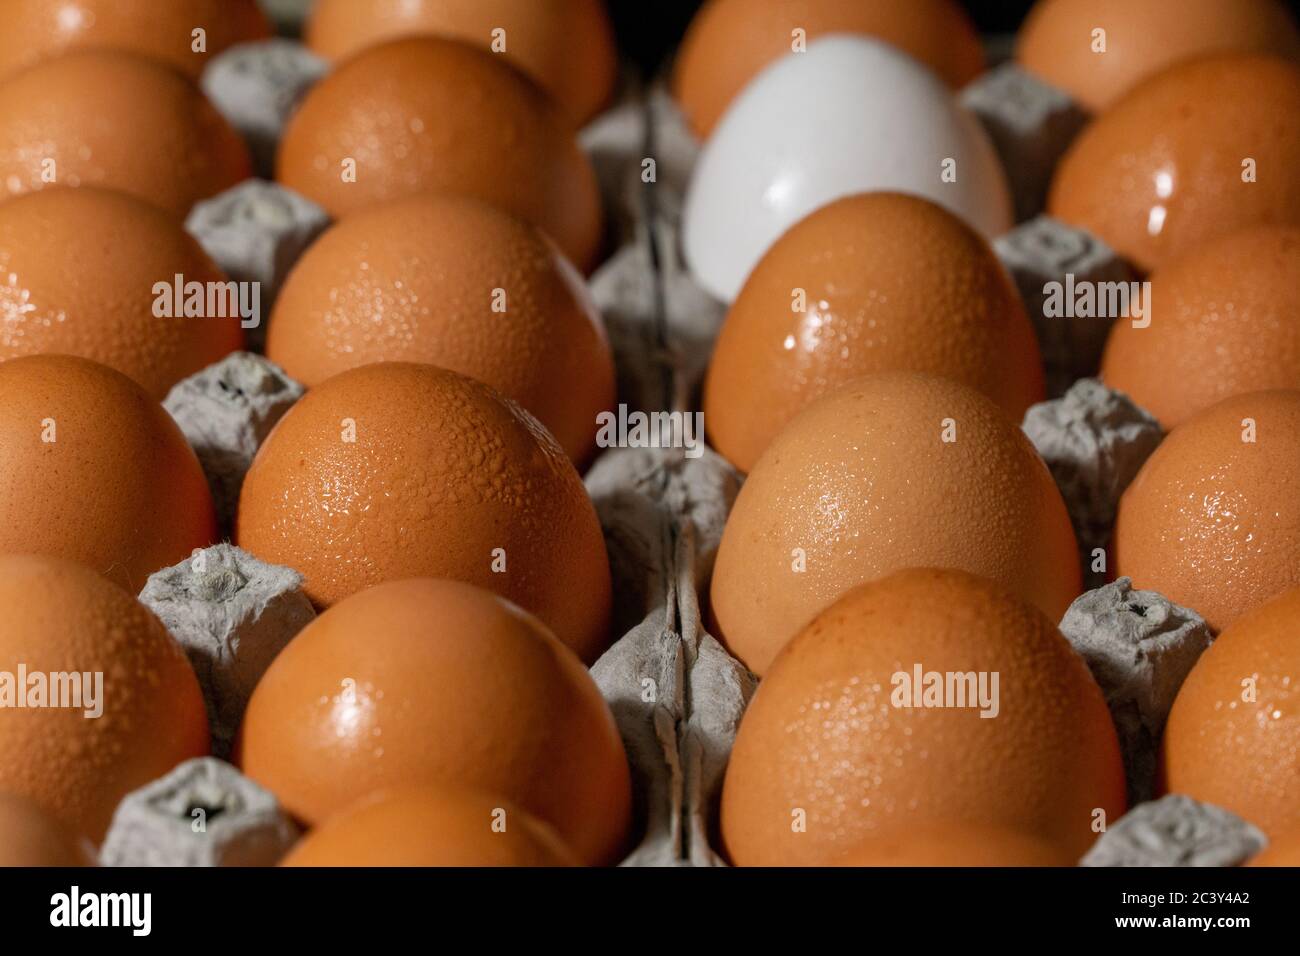 One White chicken Egg in two dozen brown chicken egg carton cardboard contrast stock photograph Stock Photo